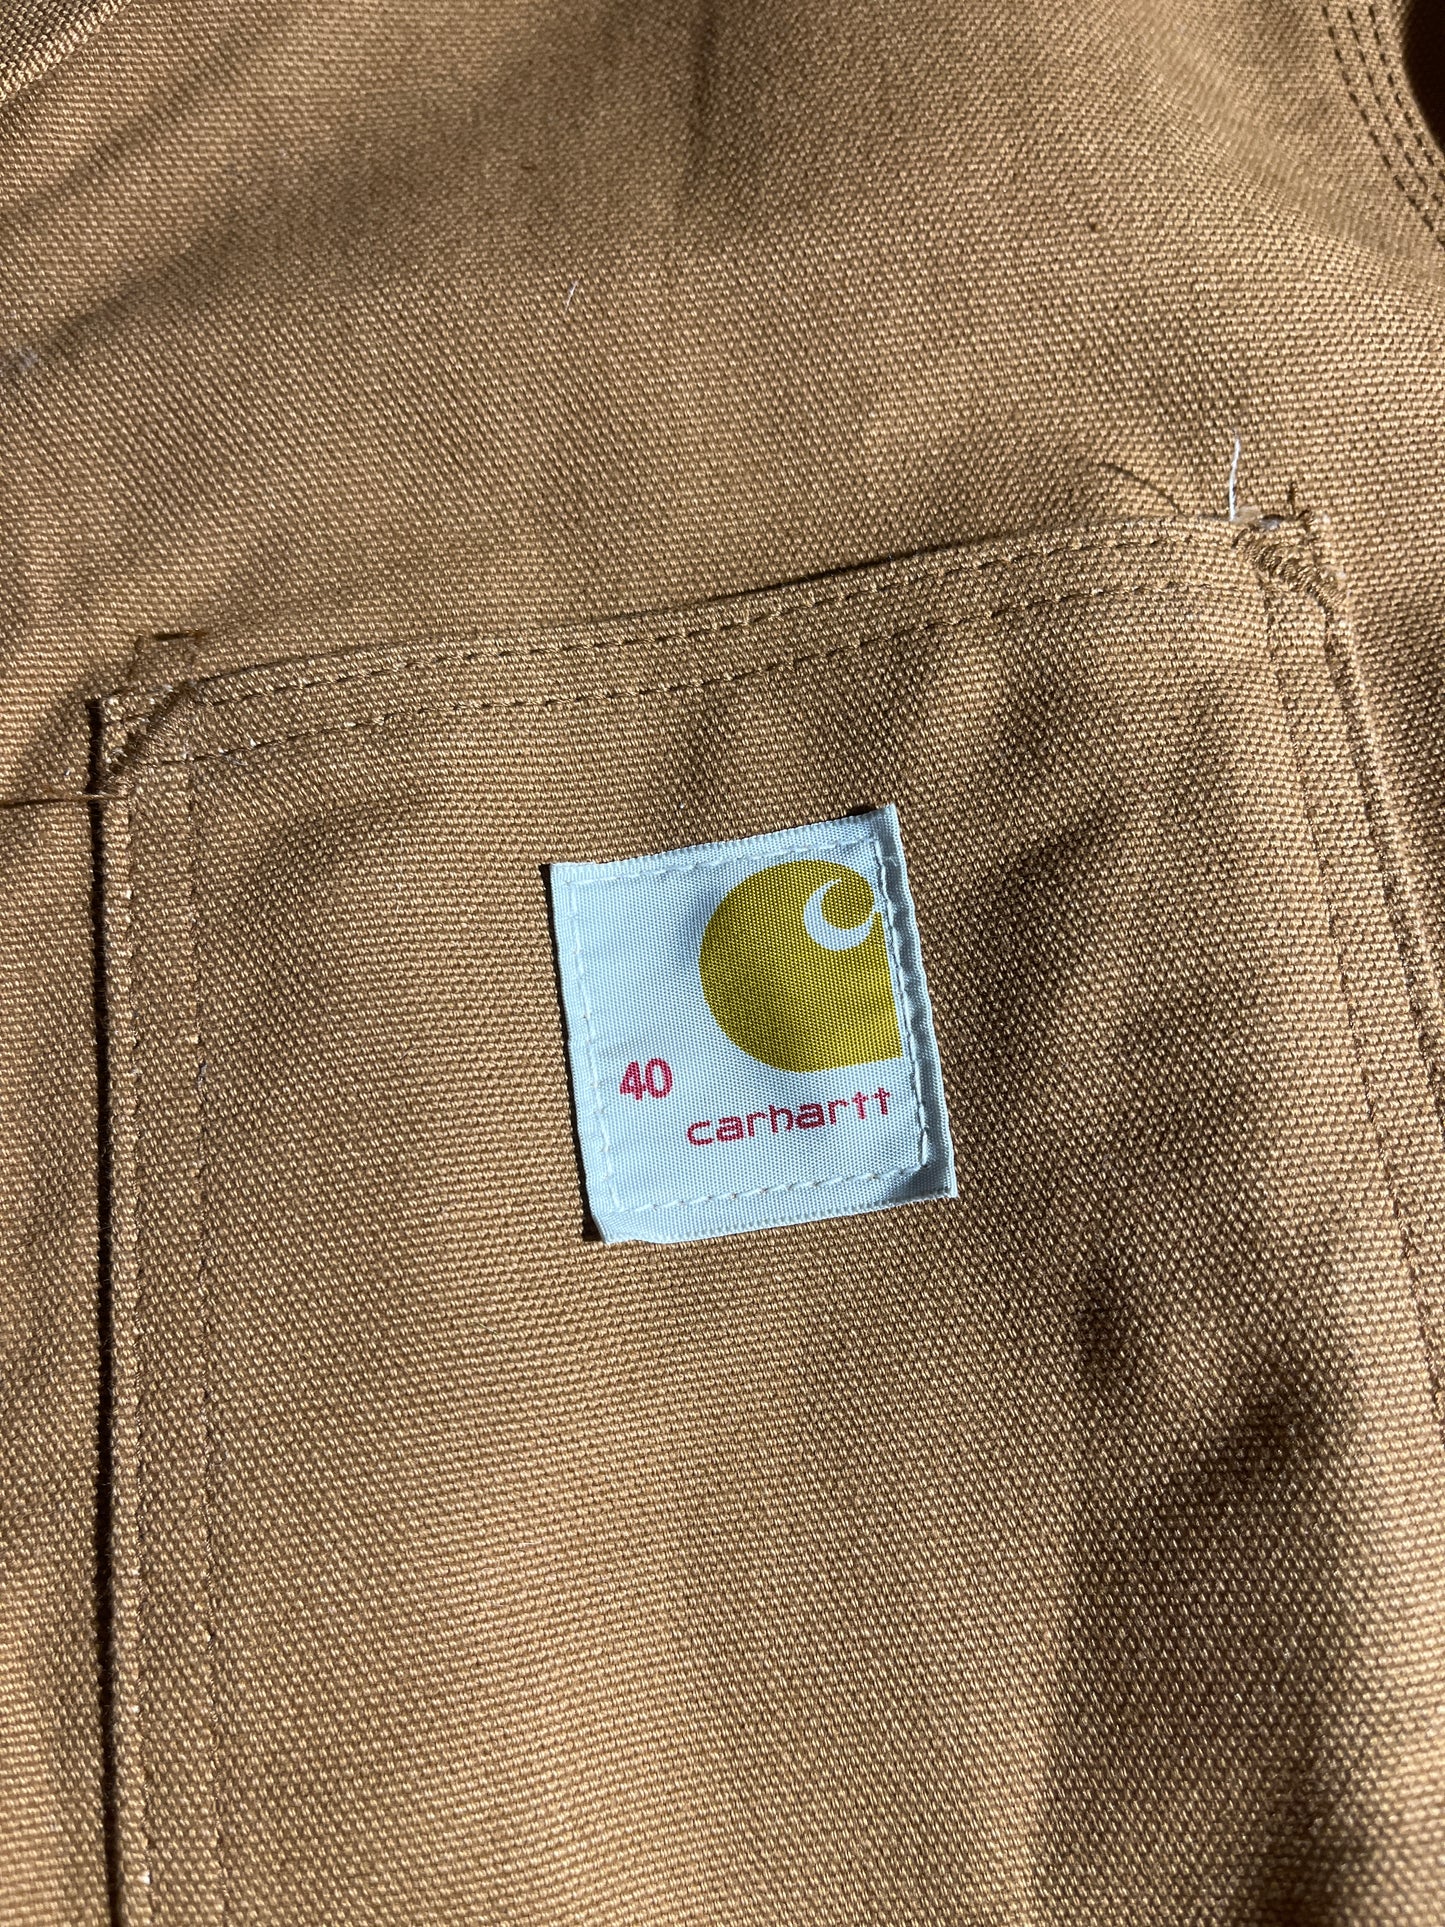 Vintage USA Made Carhartt Chore Jacket